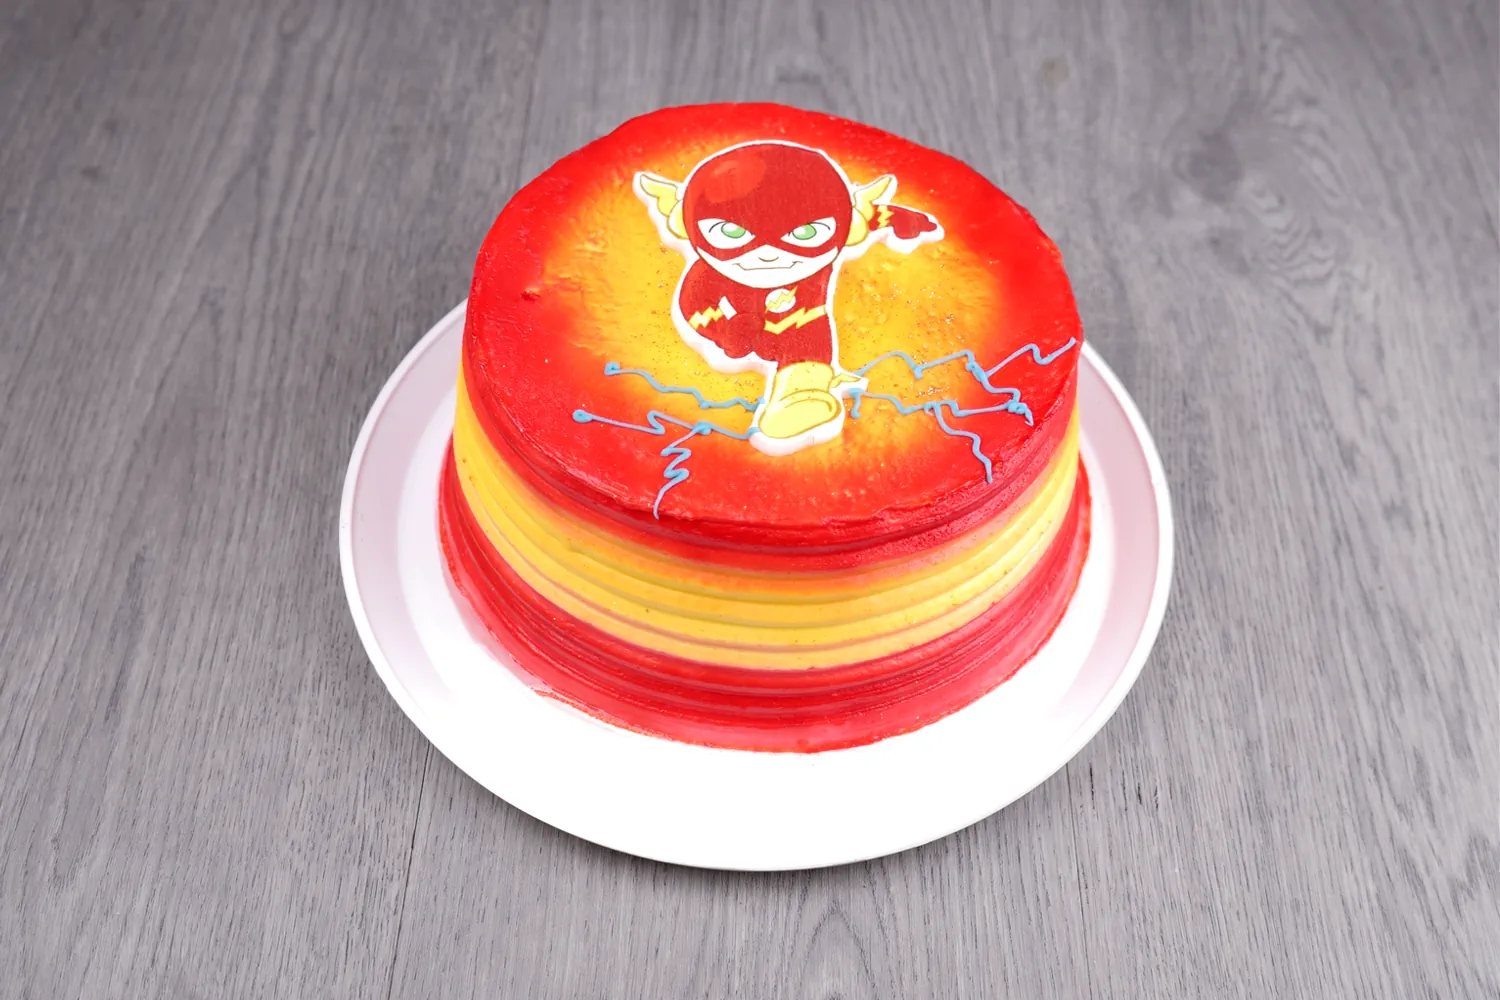 Pastel Flash dc temarica de superheroes fiesta de heroes fiesta de superheroes pastel de superheroes falsh batman